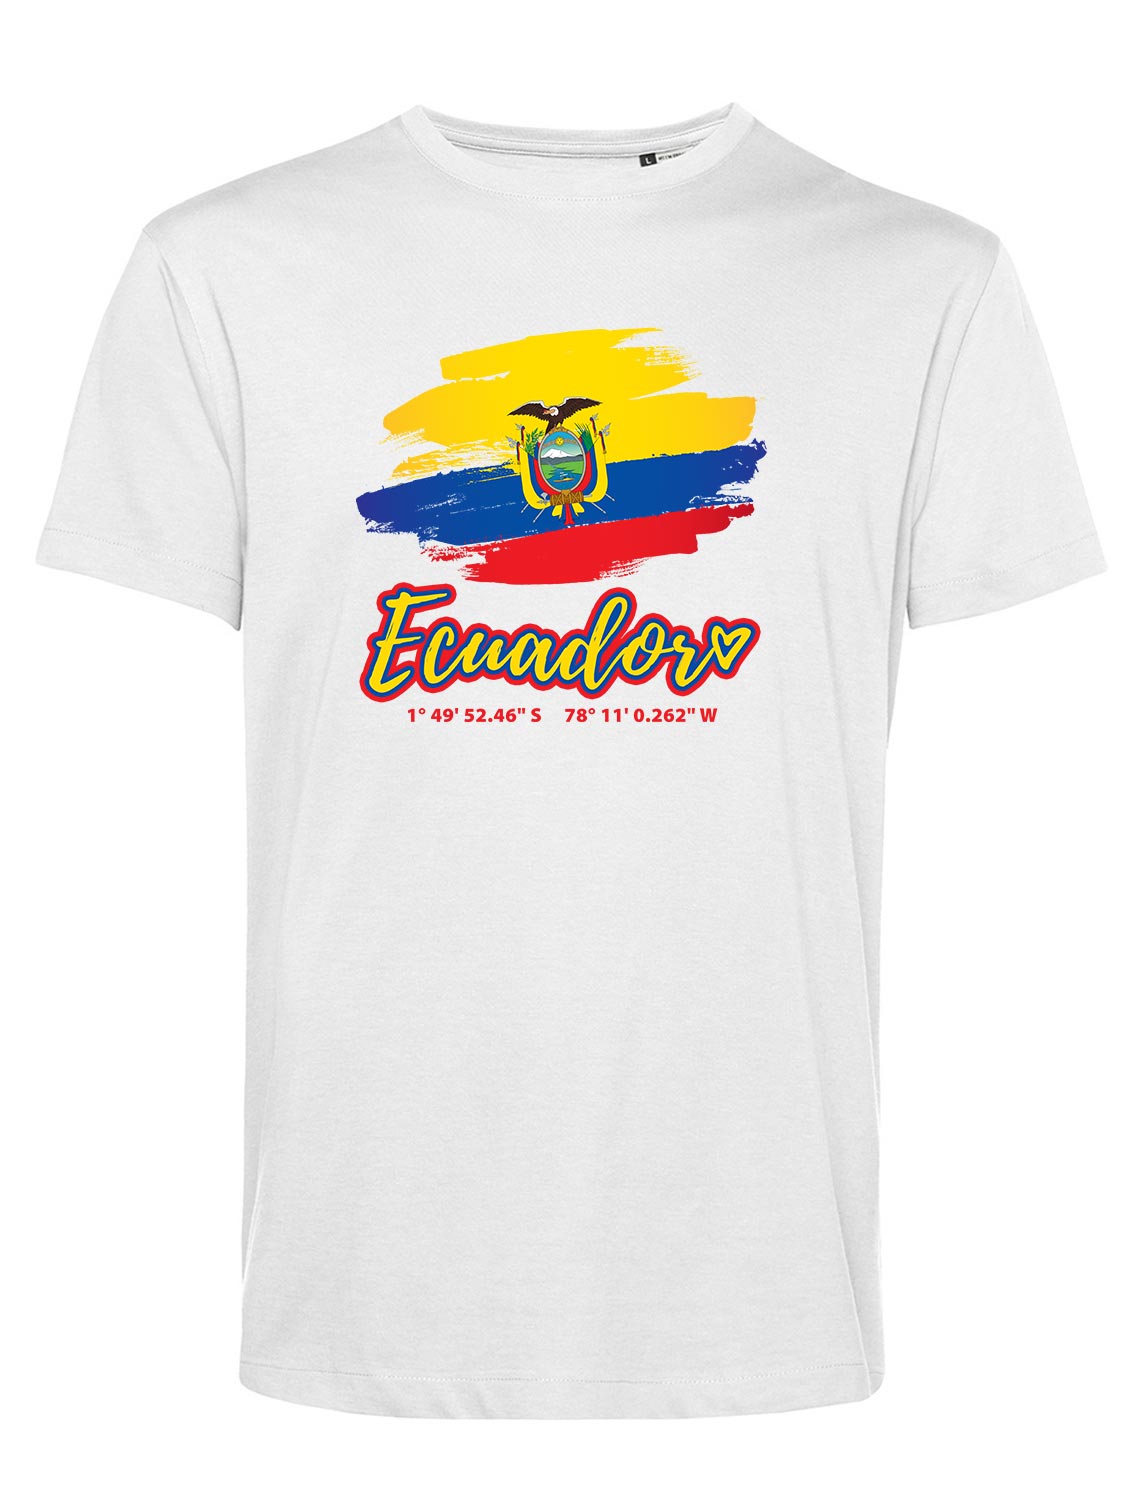 Shirt-Ecuador